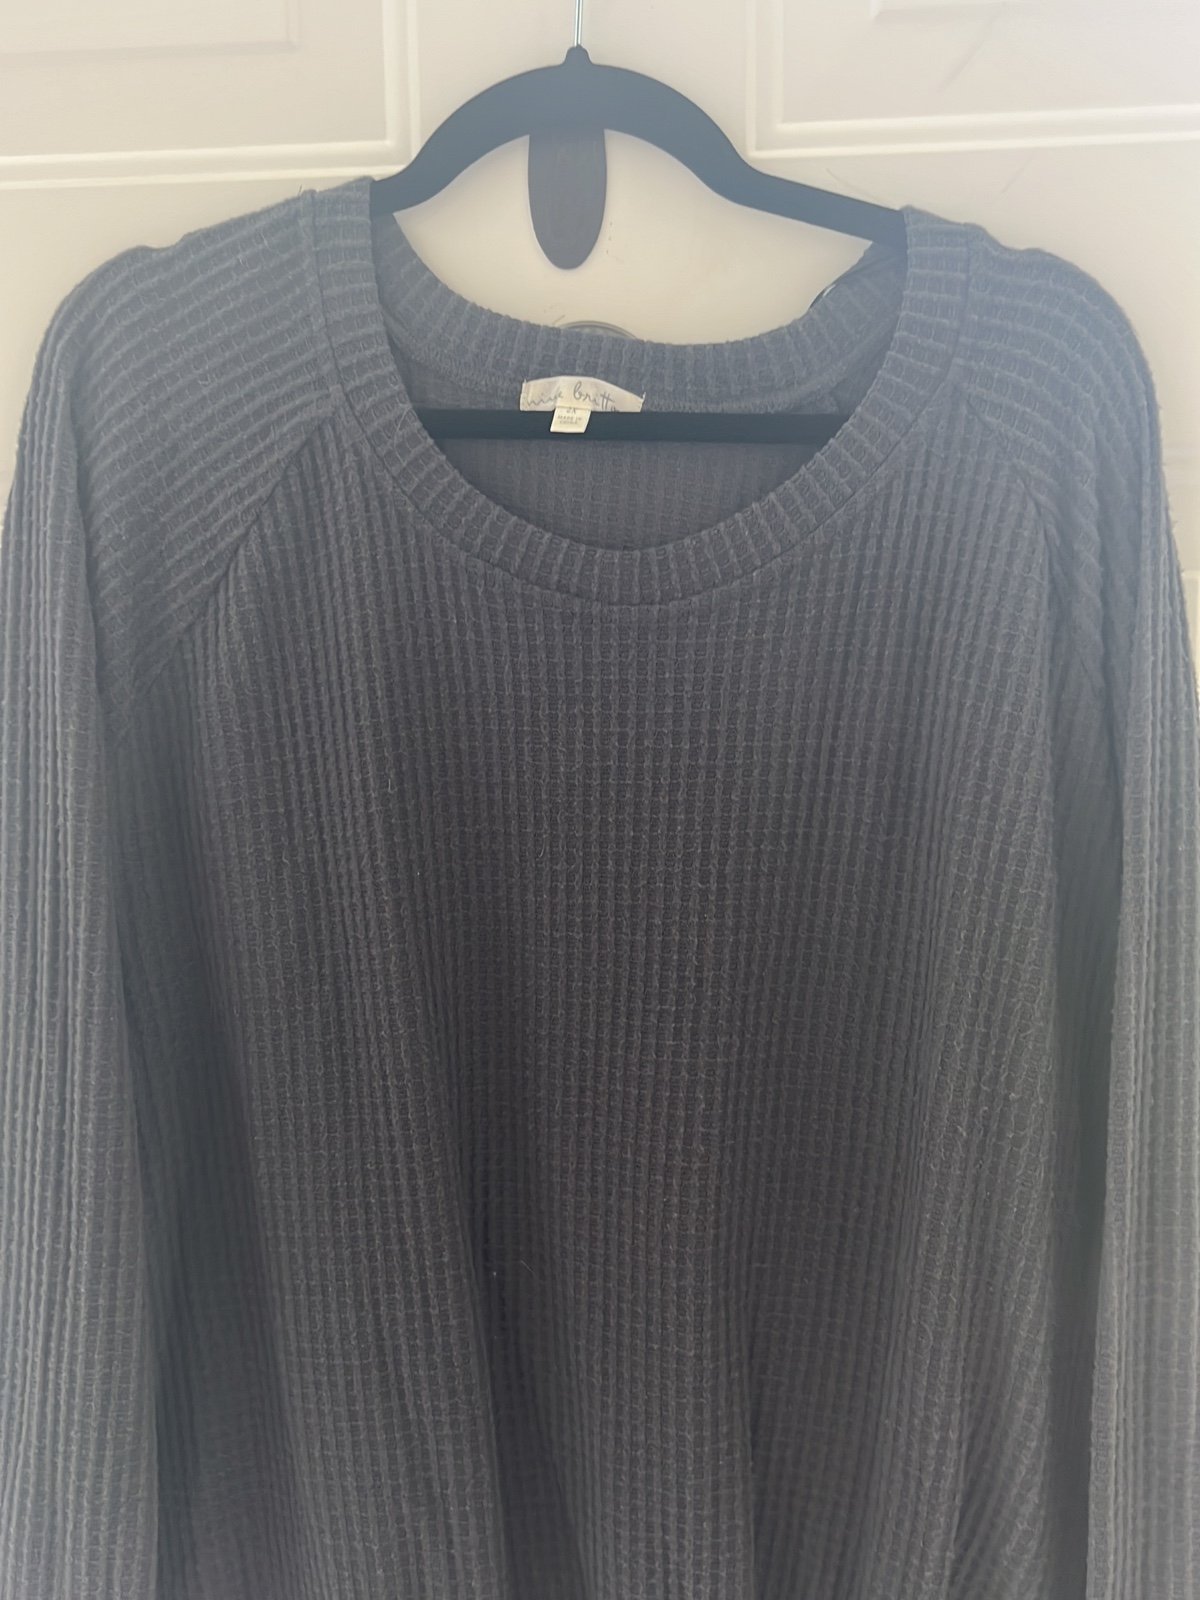 Classic Grey Knit Sweater LZulmJ2Y2 Wholesale